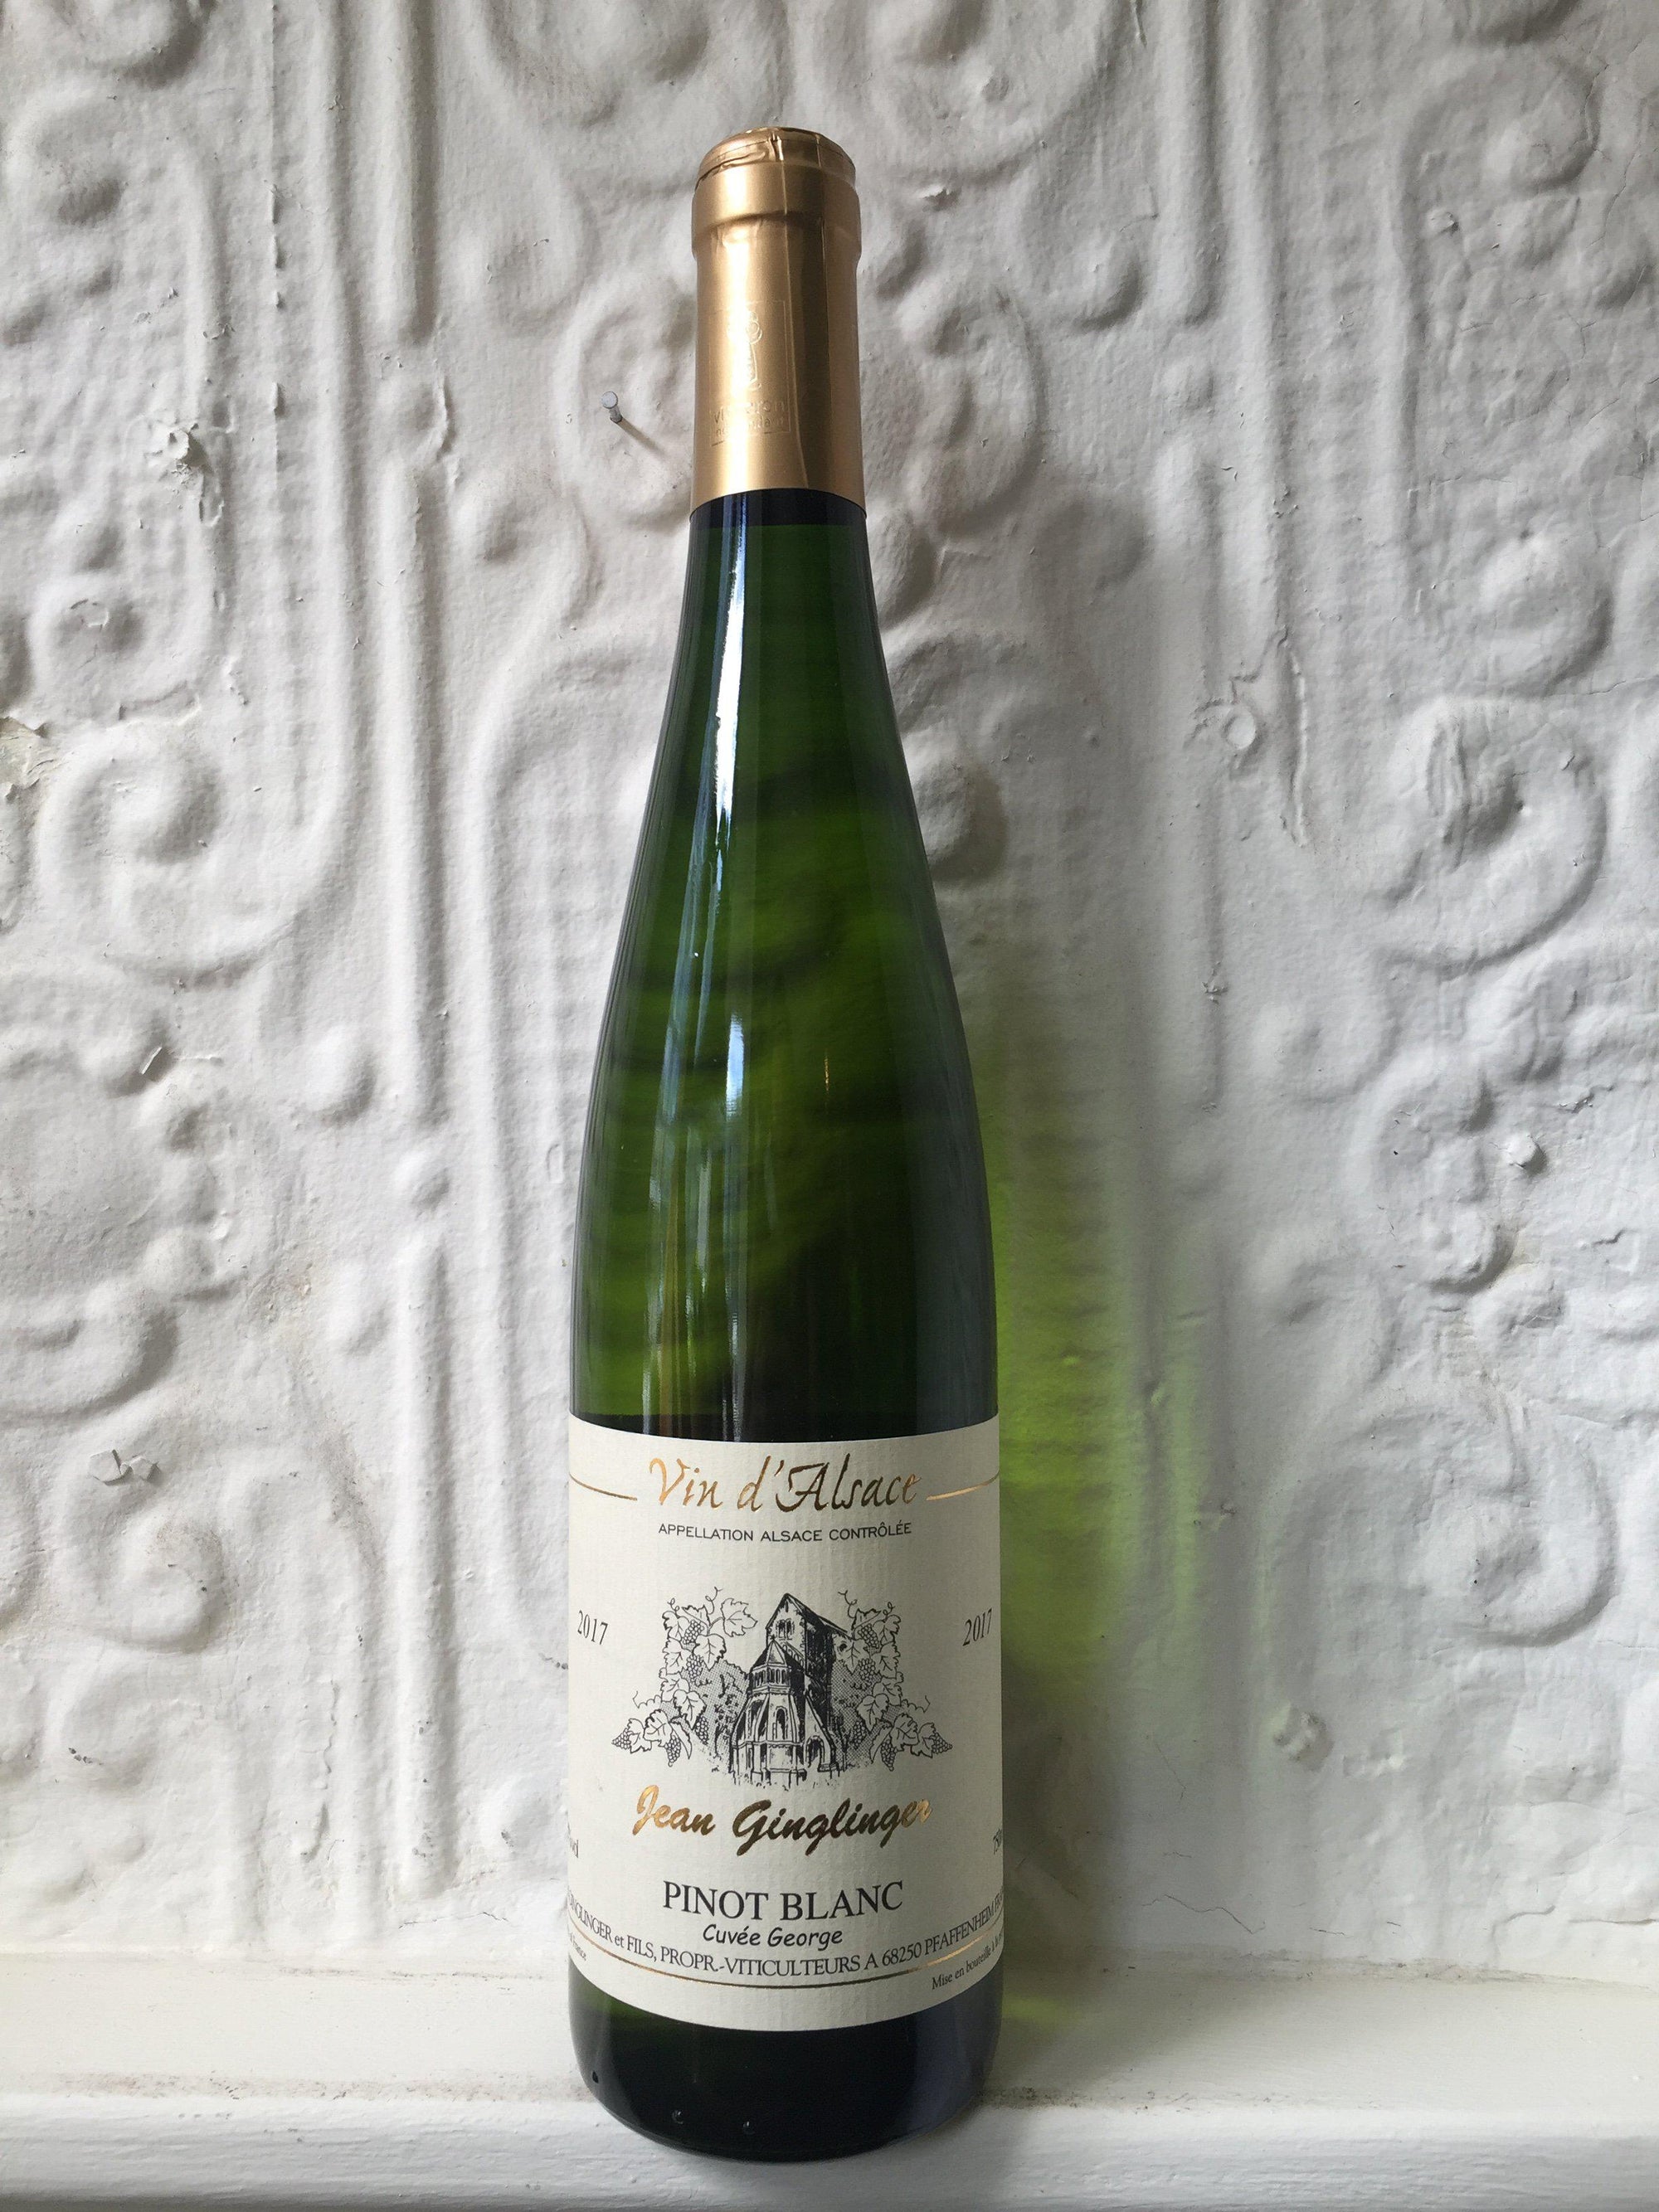 Pinot Blanc "Cuvee George", Jean Francois Ginglinger 2017 (Alsace, France)-Wine-Bibber & Bell